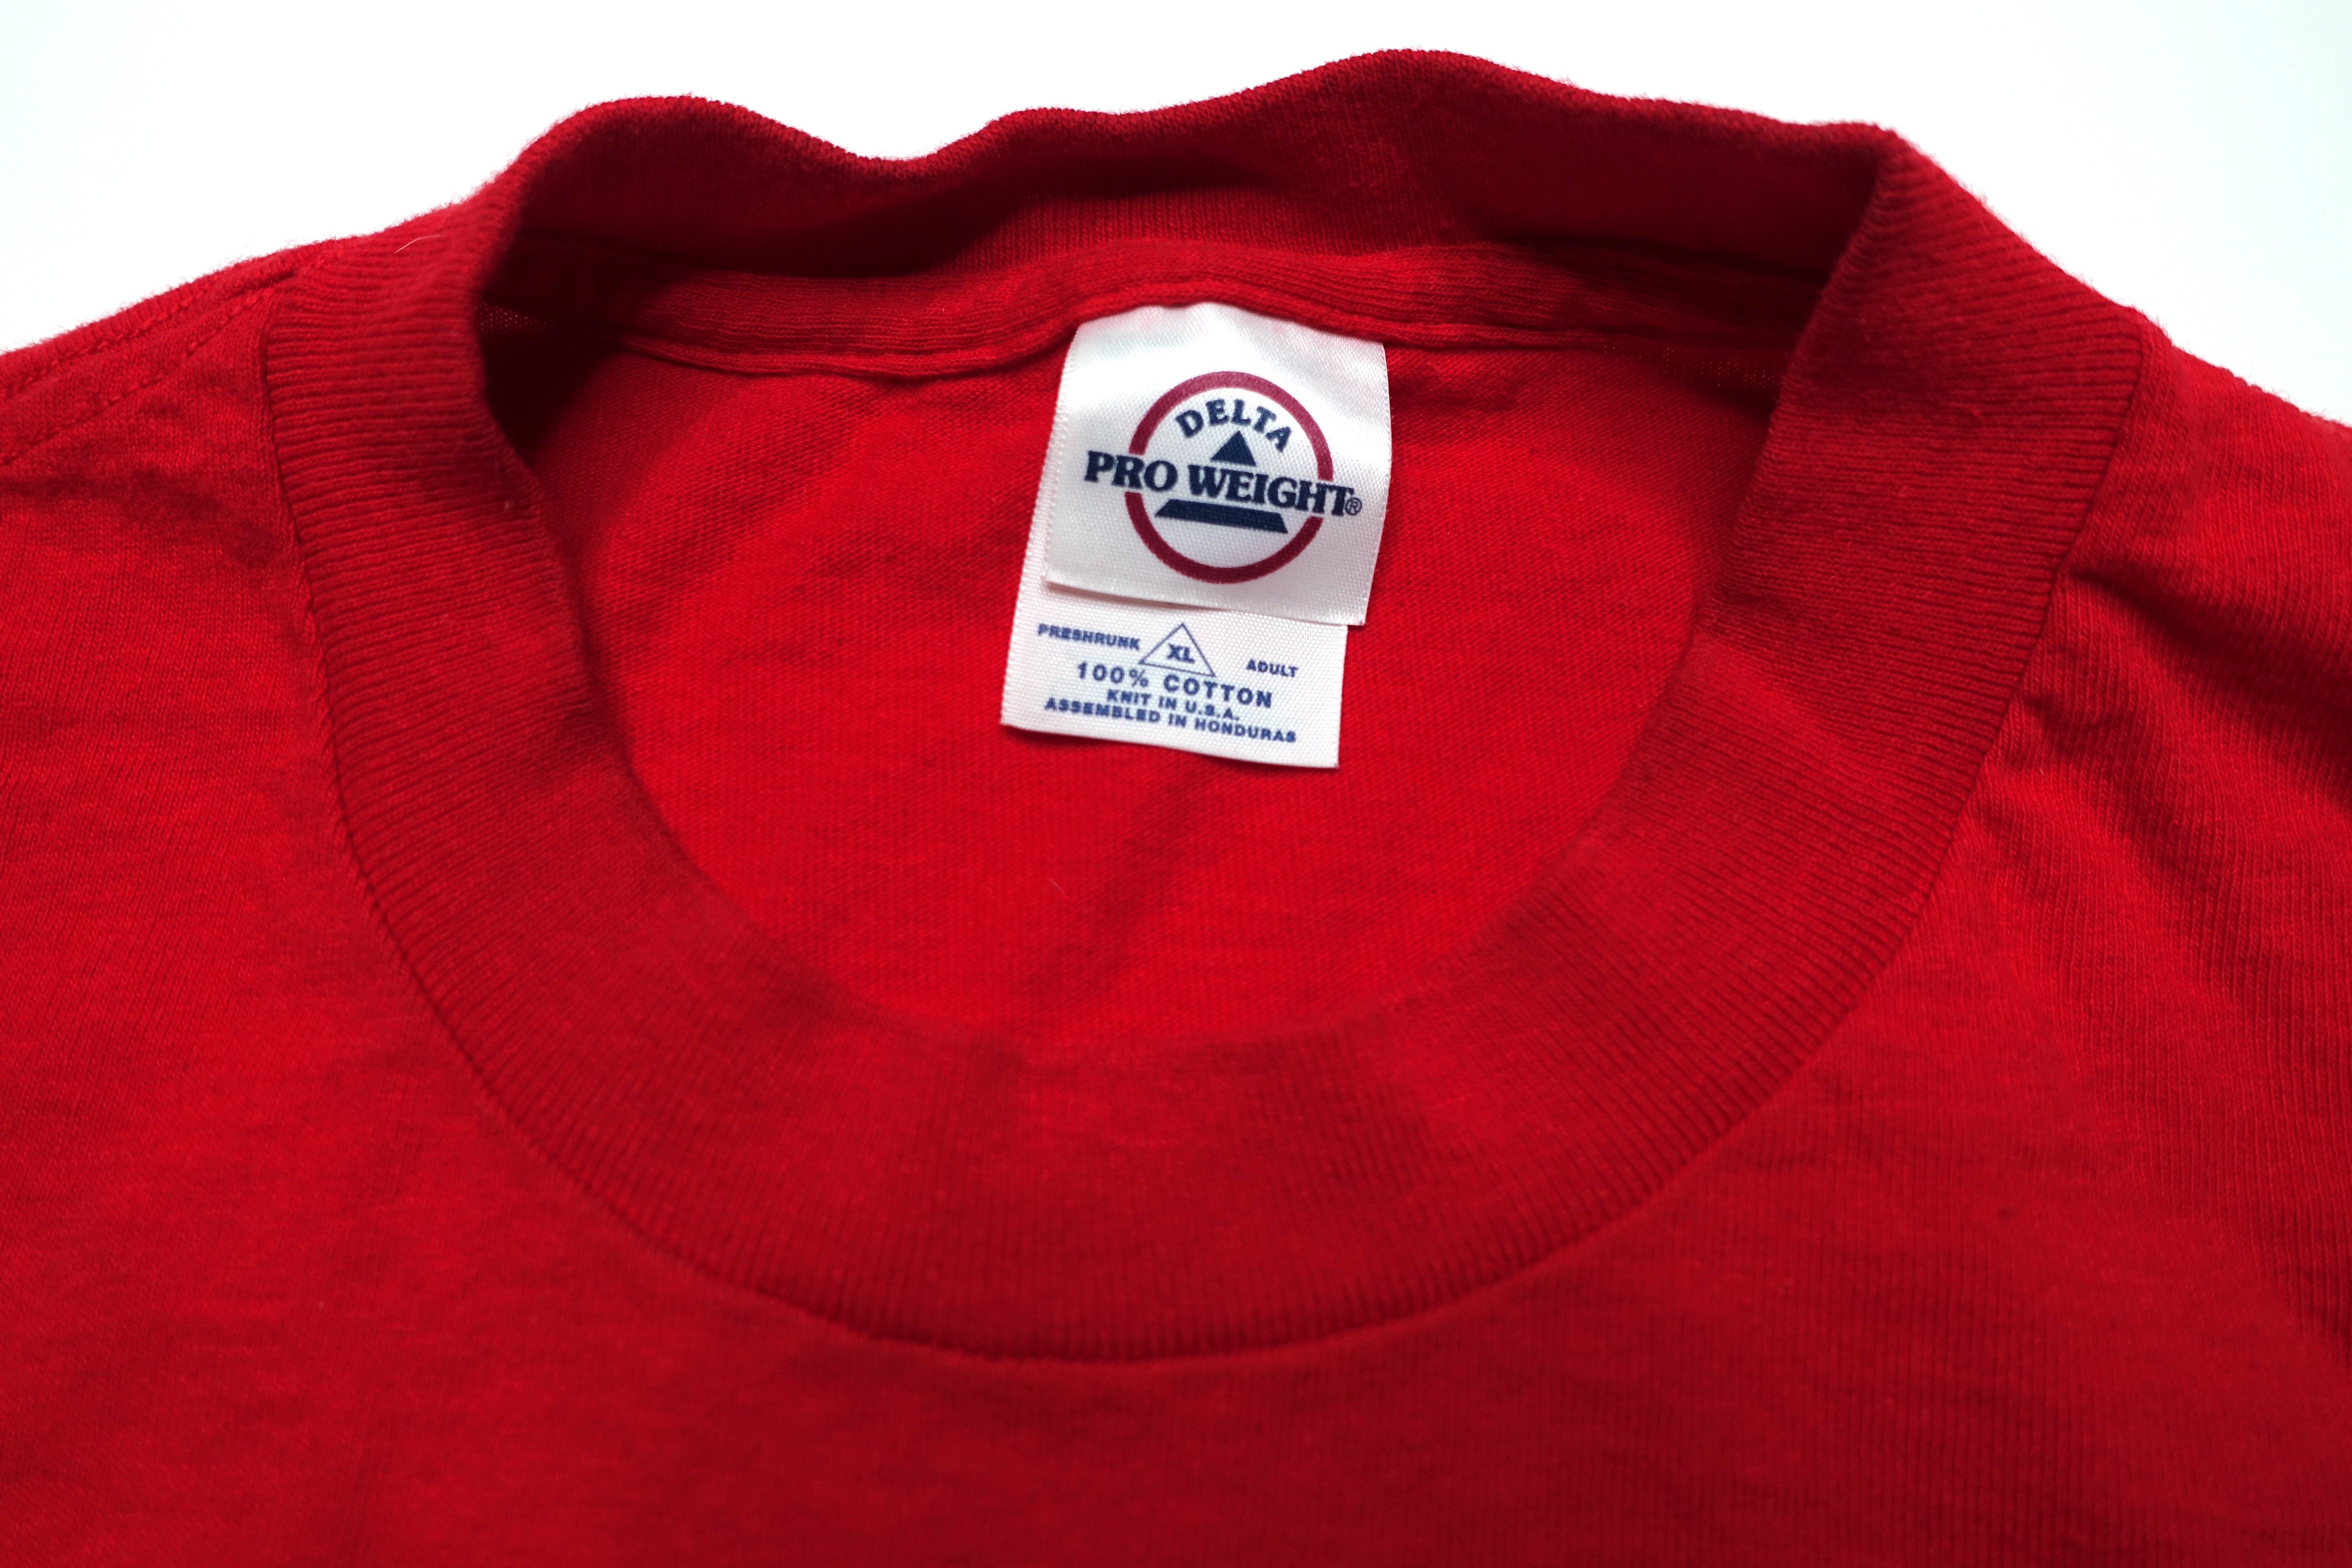 Rancid - Indestructible 2003 Tour Shirt Size XL